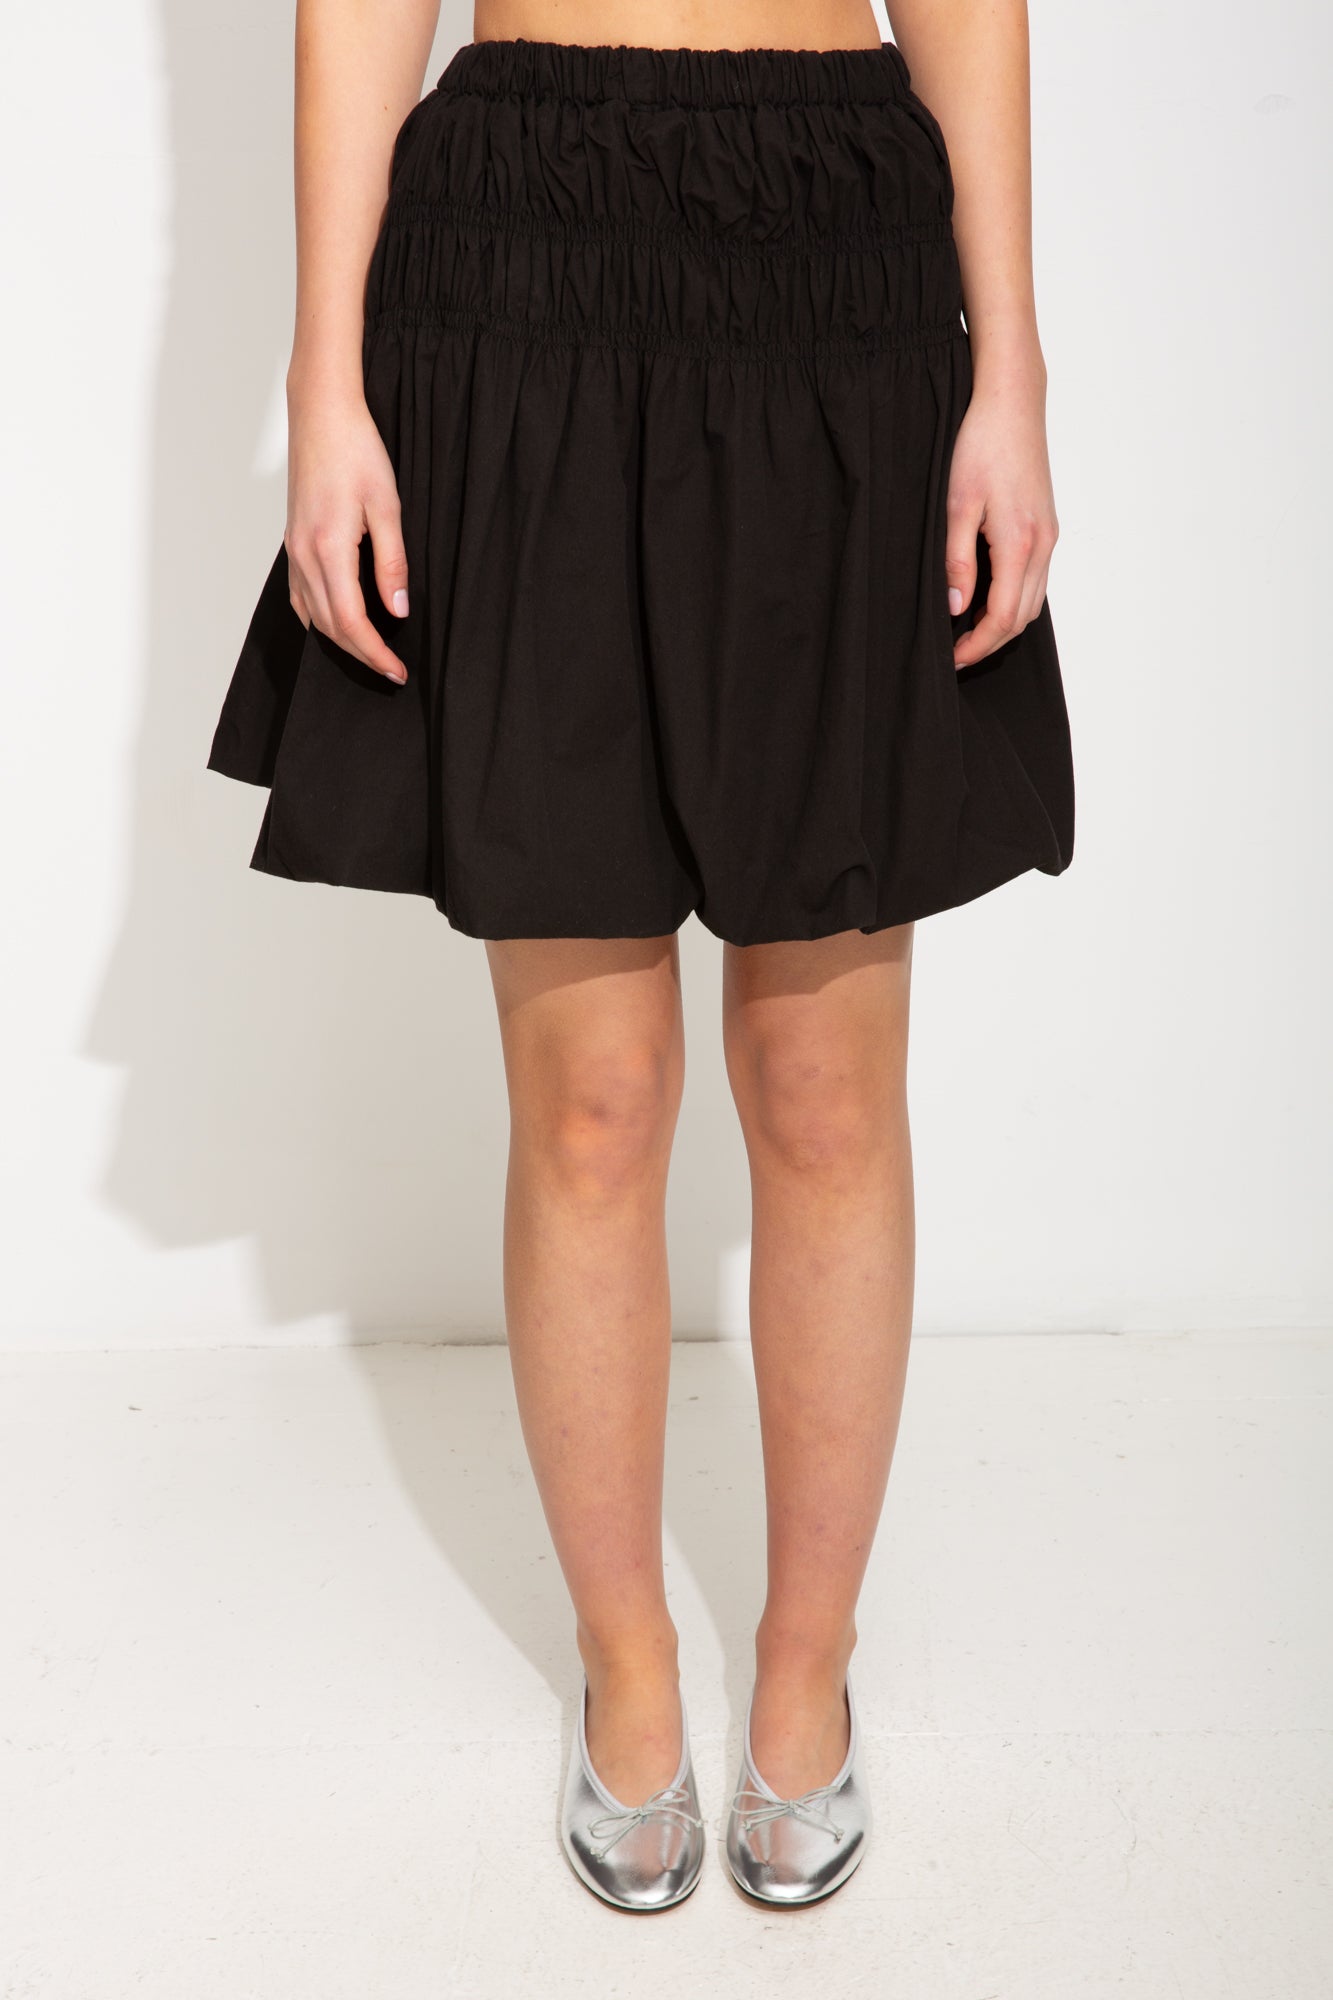 Lima - Skirt